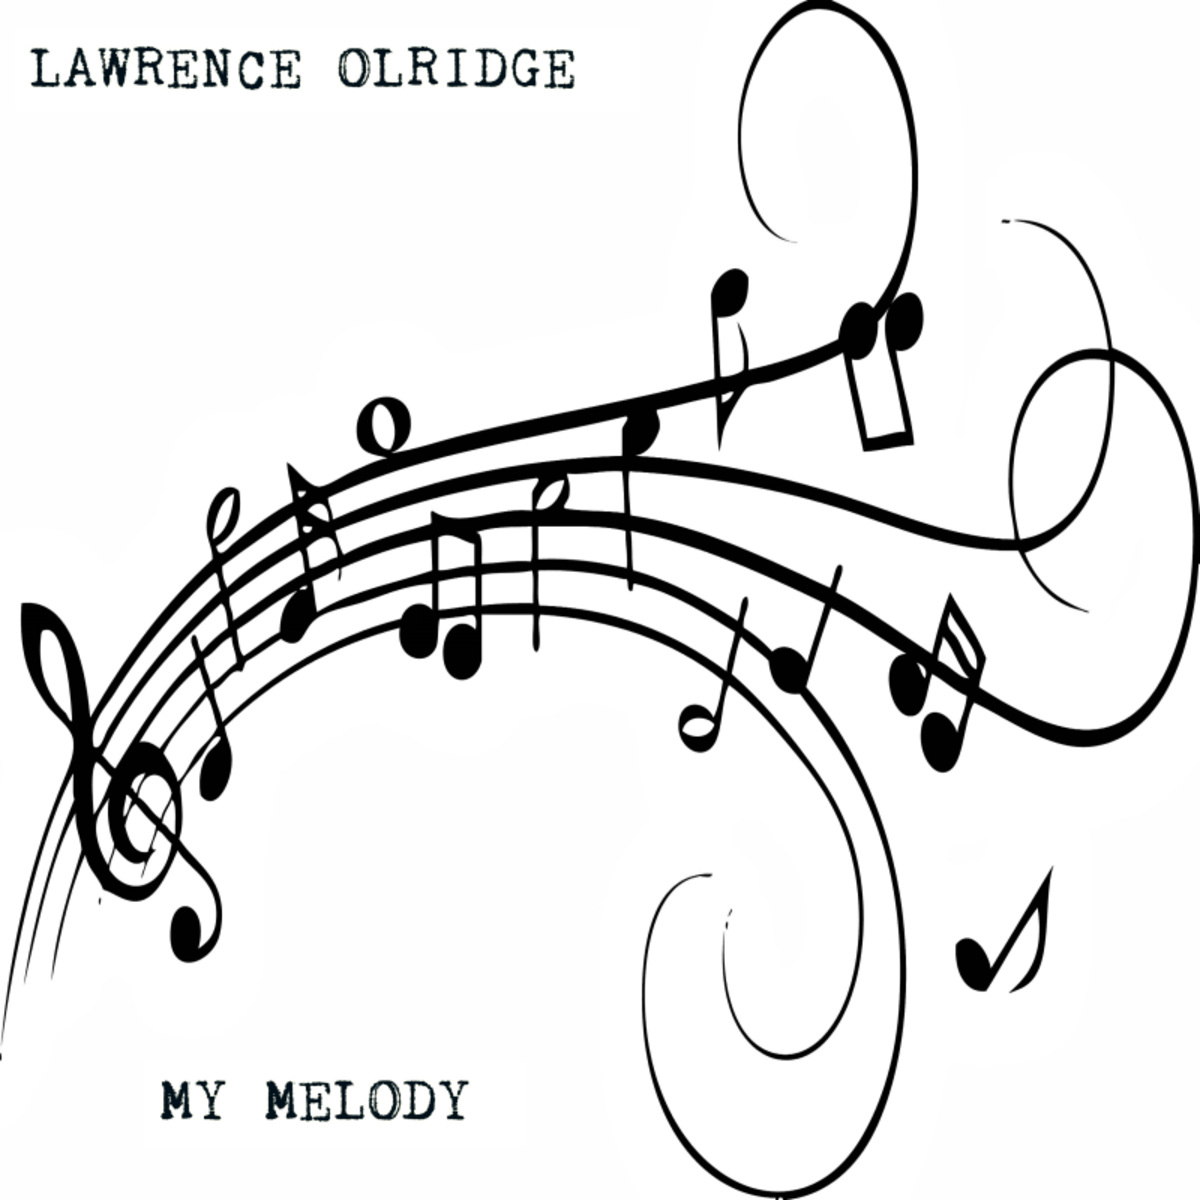 Lawrence olridge - MY Melody / AJAY RECORDINGS